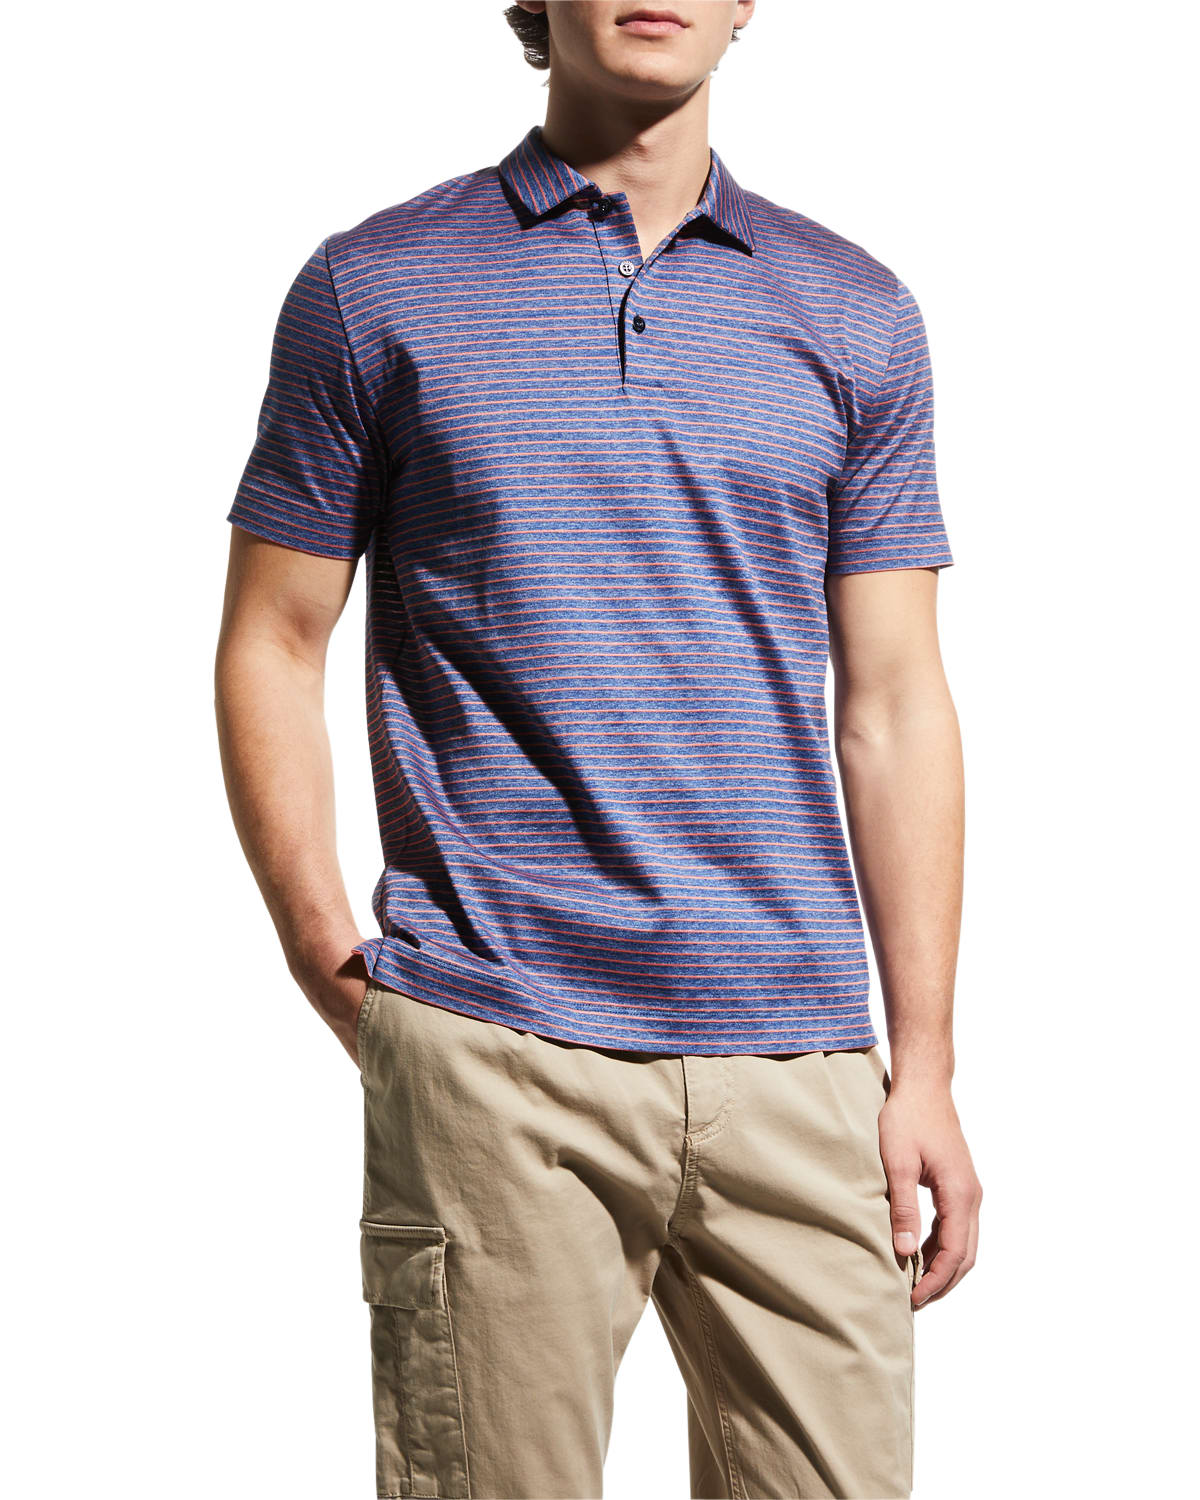 Canali Men's Striped Polo Shirt